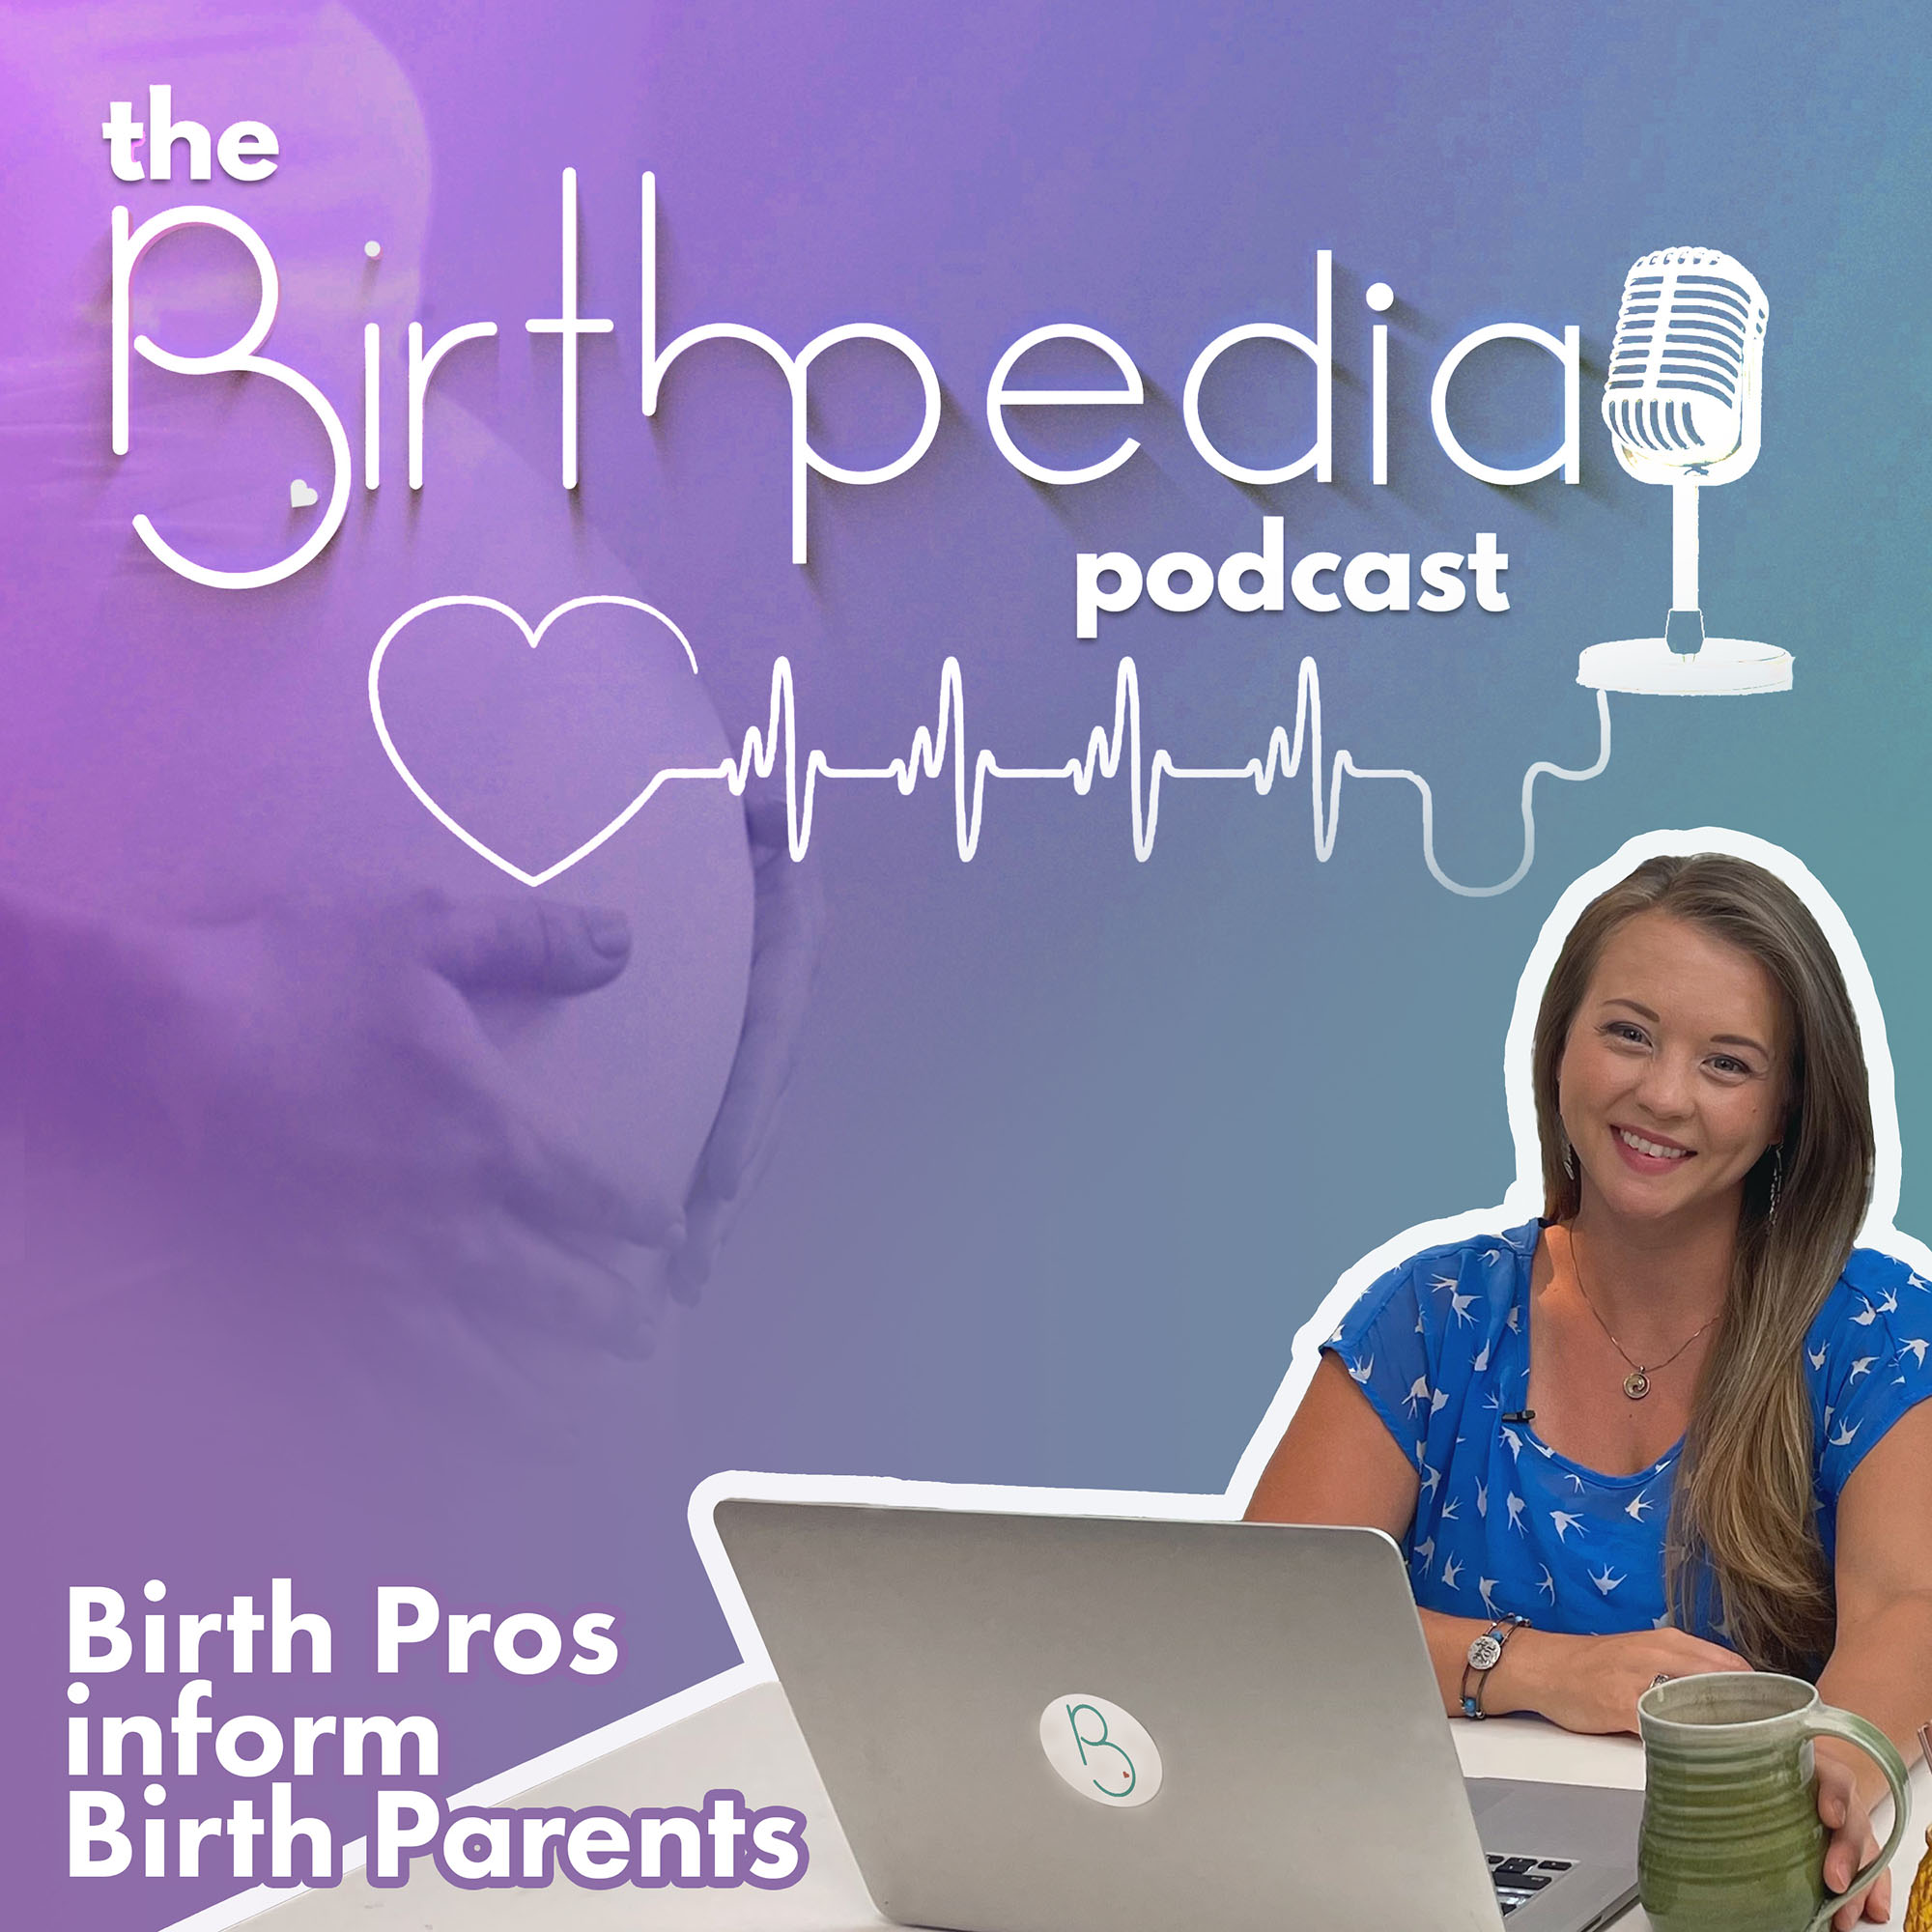 Artwork for podcast Birthpedia